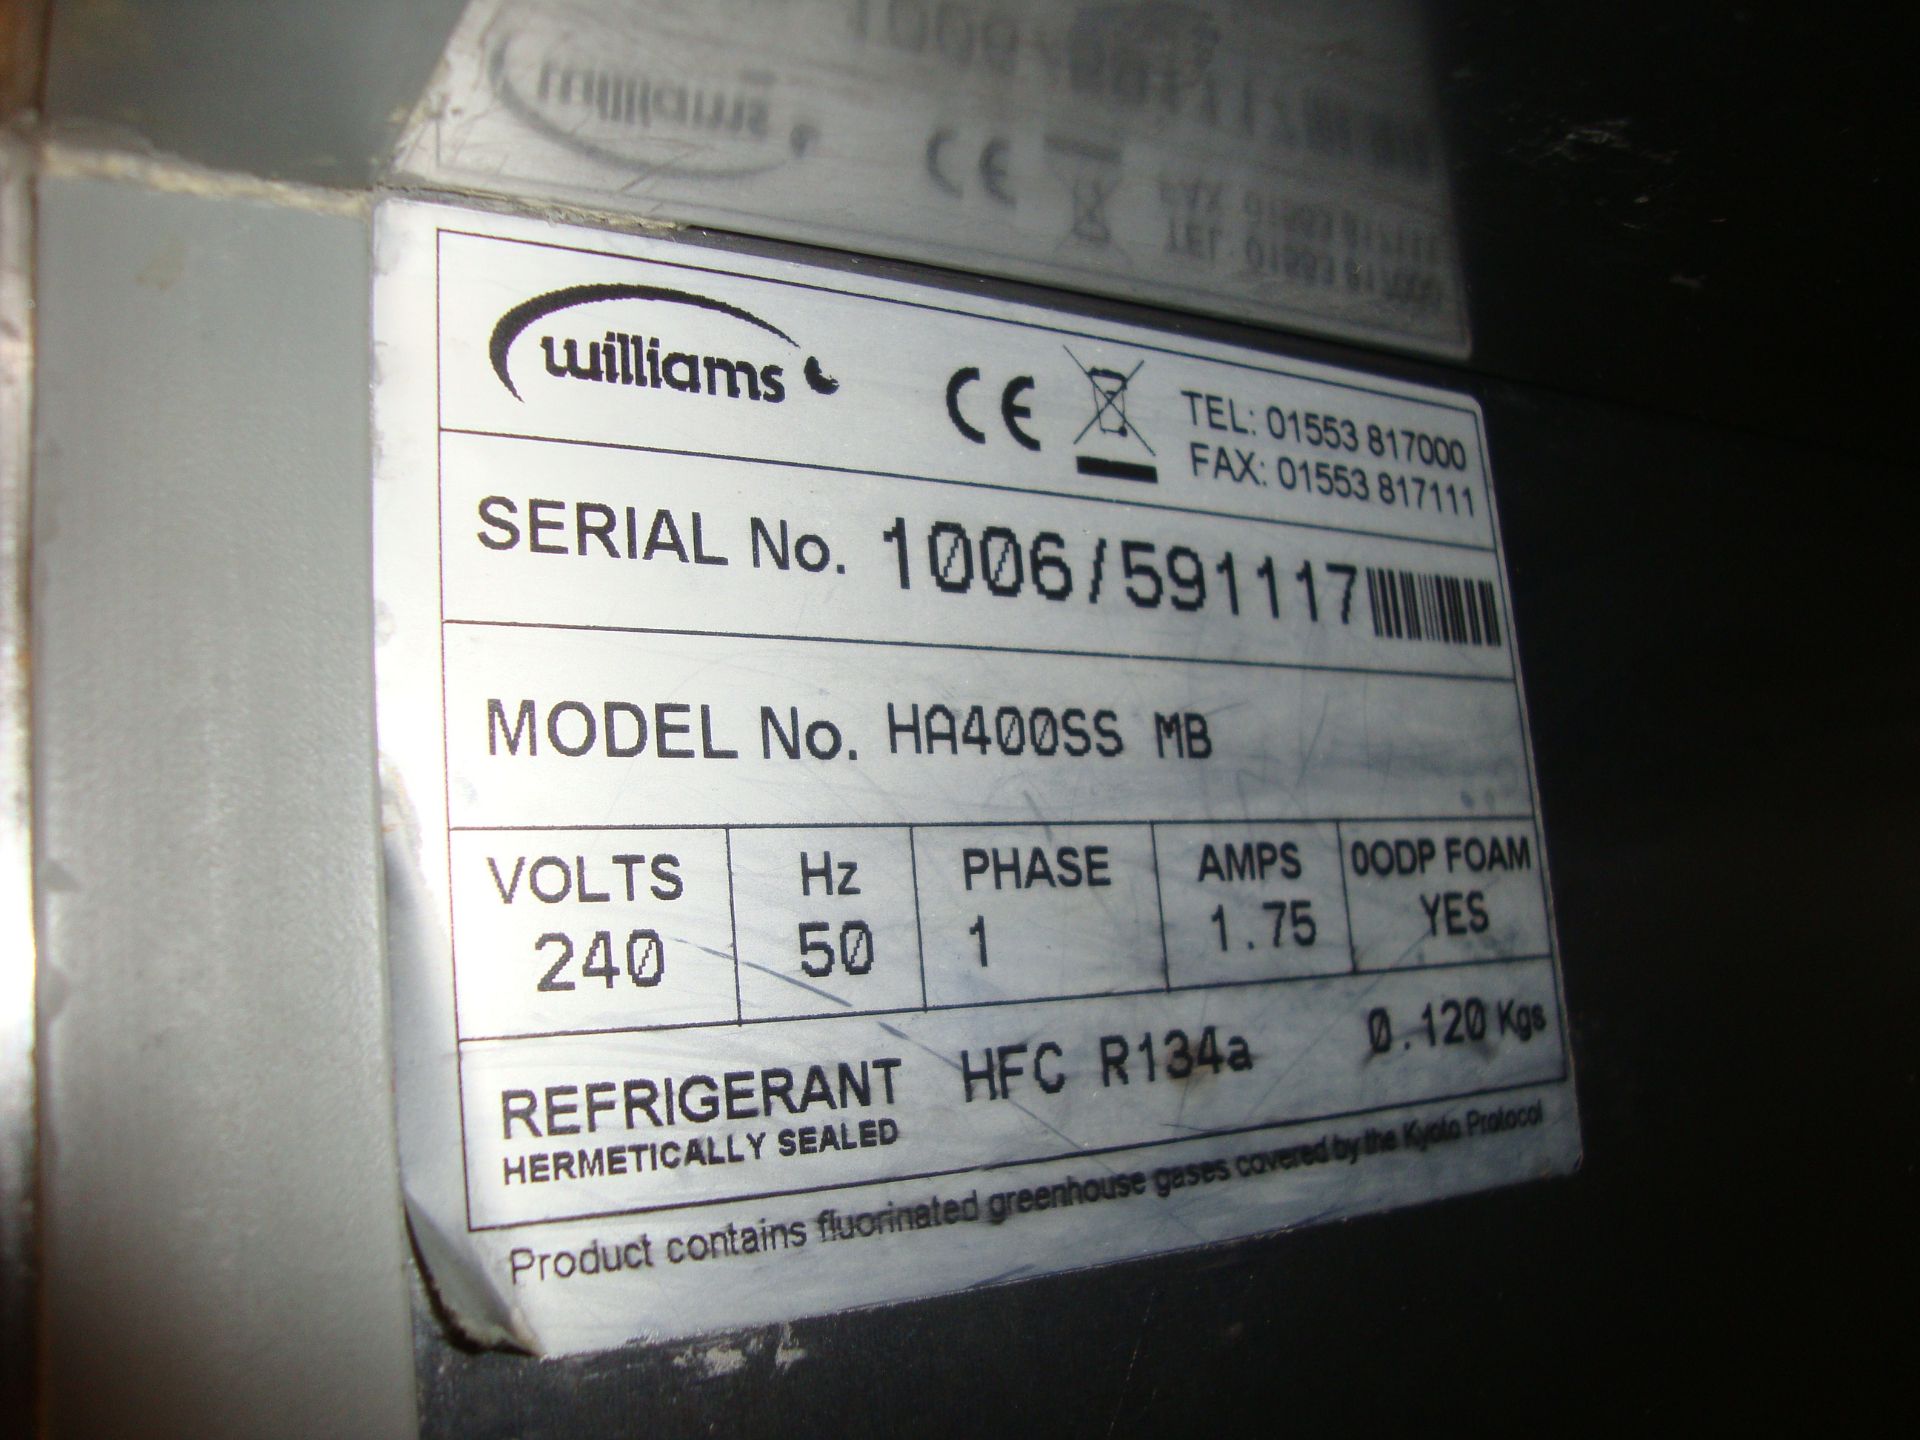 Williams HA40055 stainless steel mobile fridge - Image 2 of 3